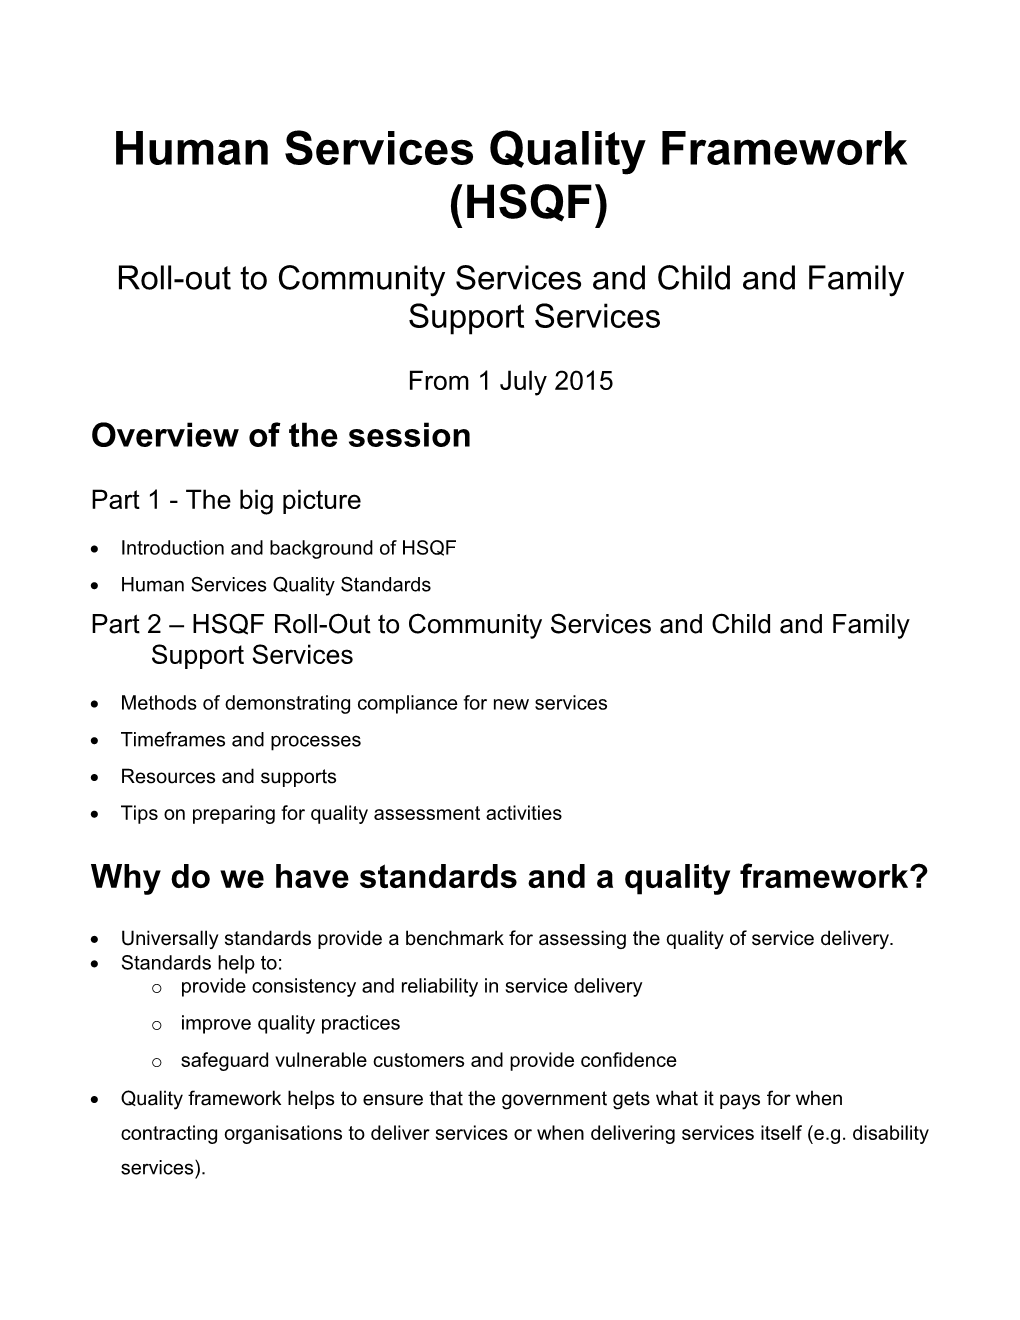 Human Services Quality Framework (HSQF)